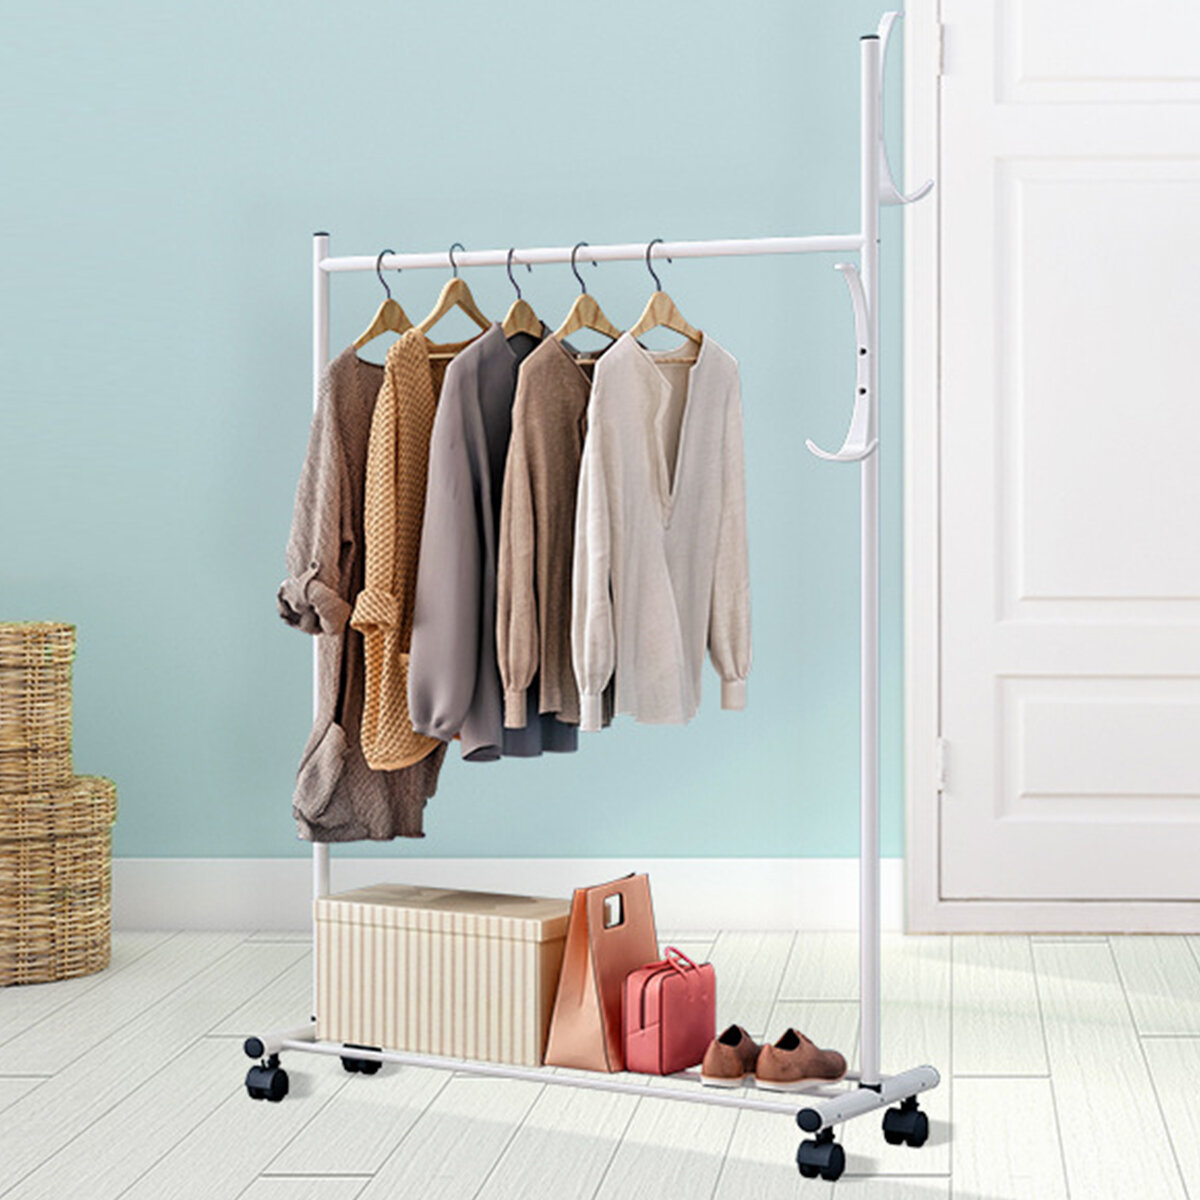 80*45*130cm Clothes Hanger Hanging Display Garment Rack Coat Rail Stand